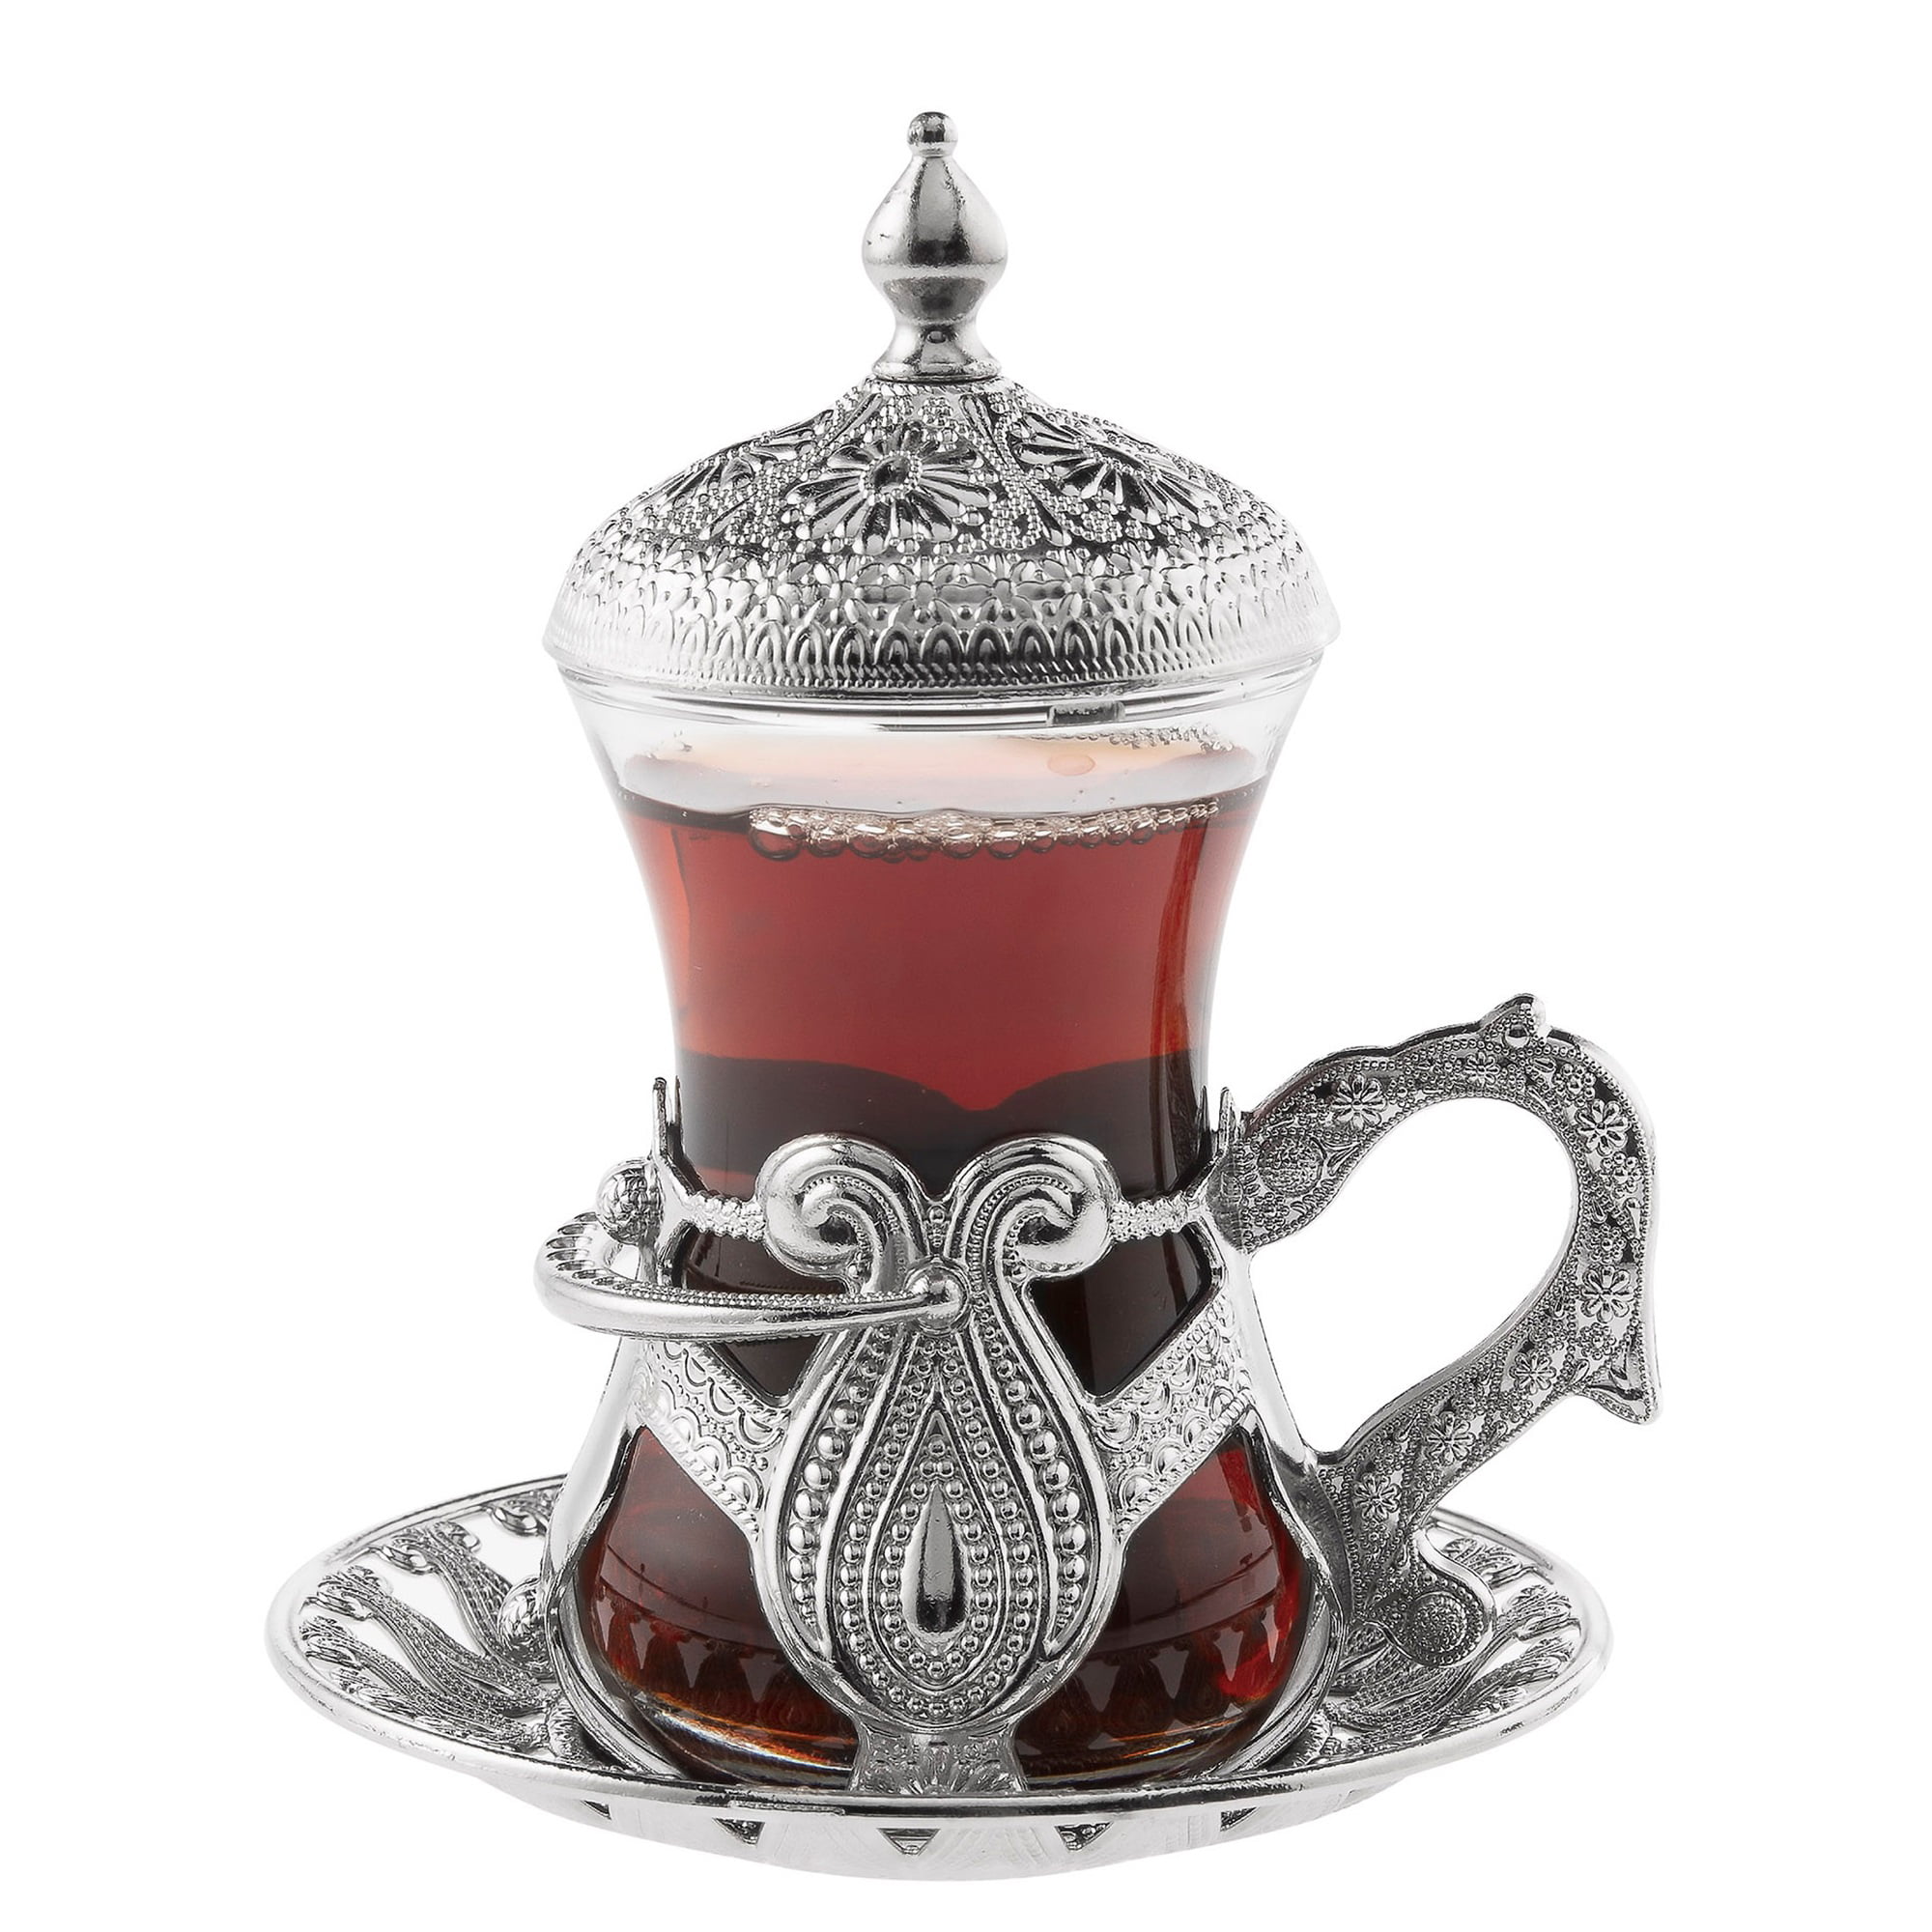 120ml Small Glass Tea Cup Classic Cut Arabic Tea Cup Clear